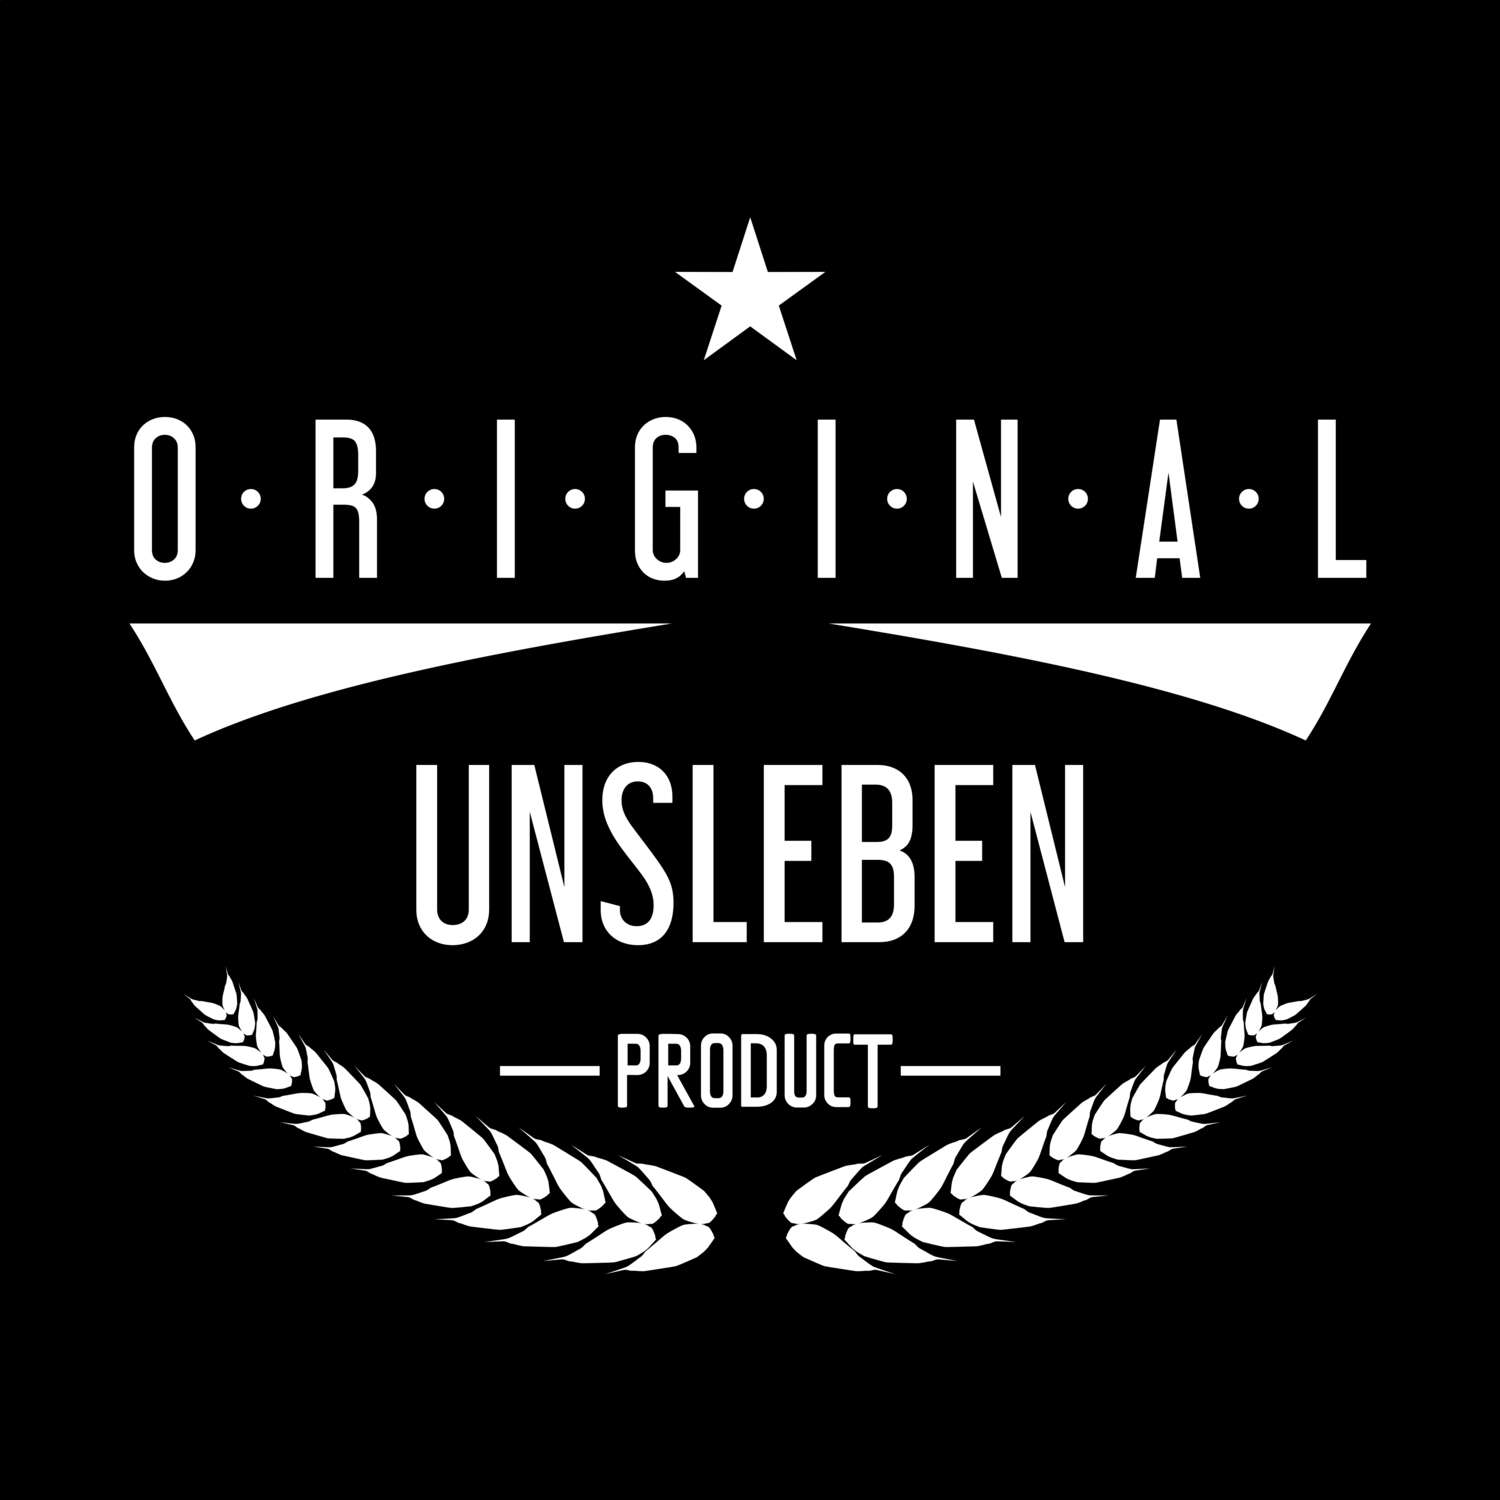 Unsleben T-Shirt »Original Product«